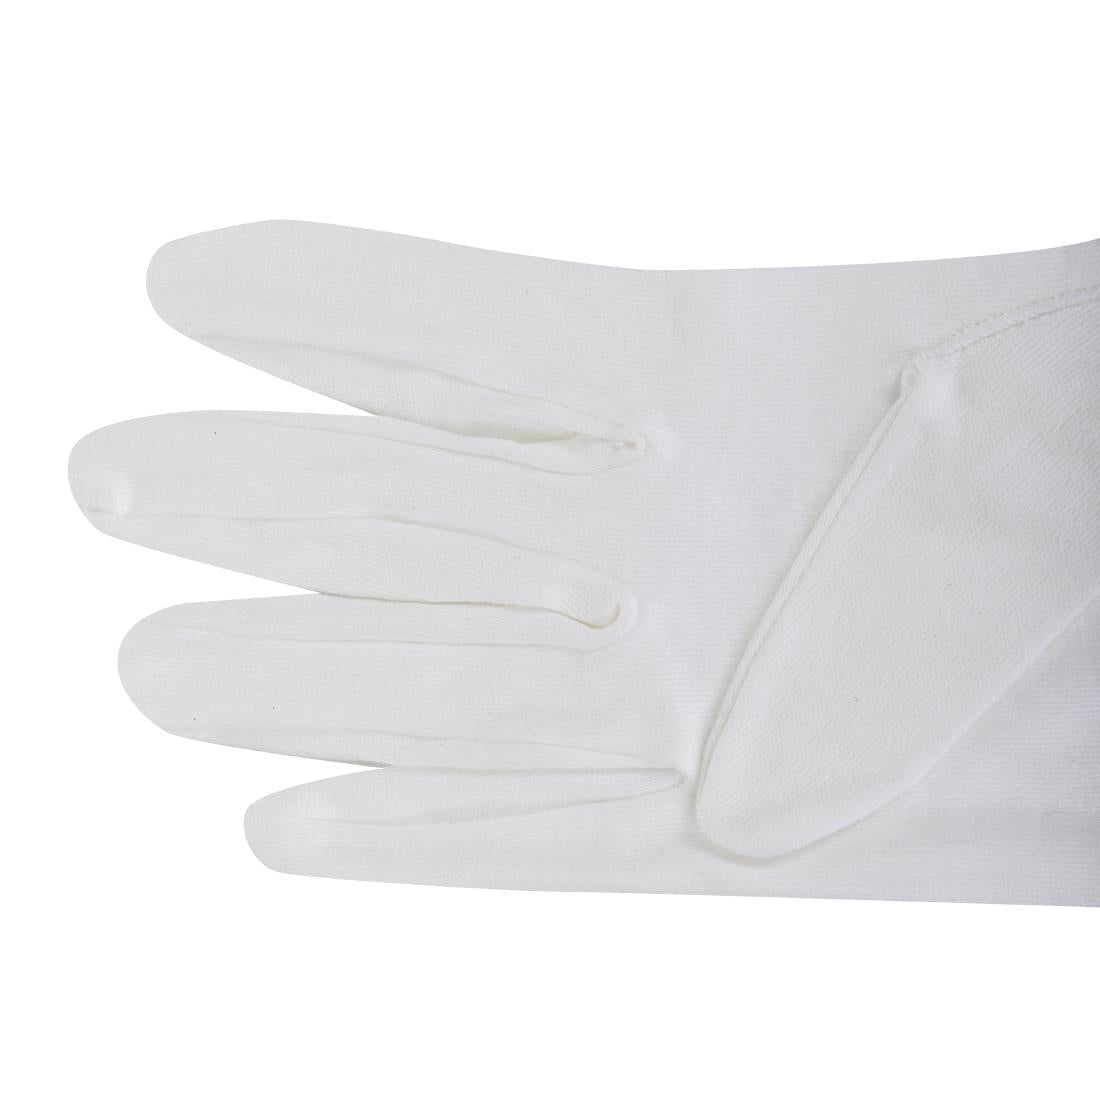 Mens Waiting Gloves White JD Catering Equipment Solutions Ltd